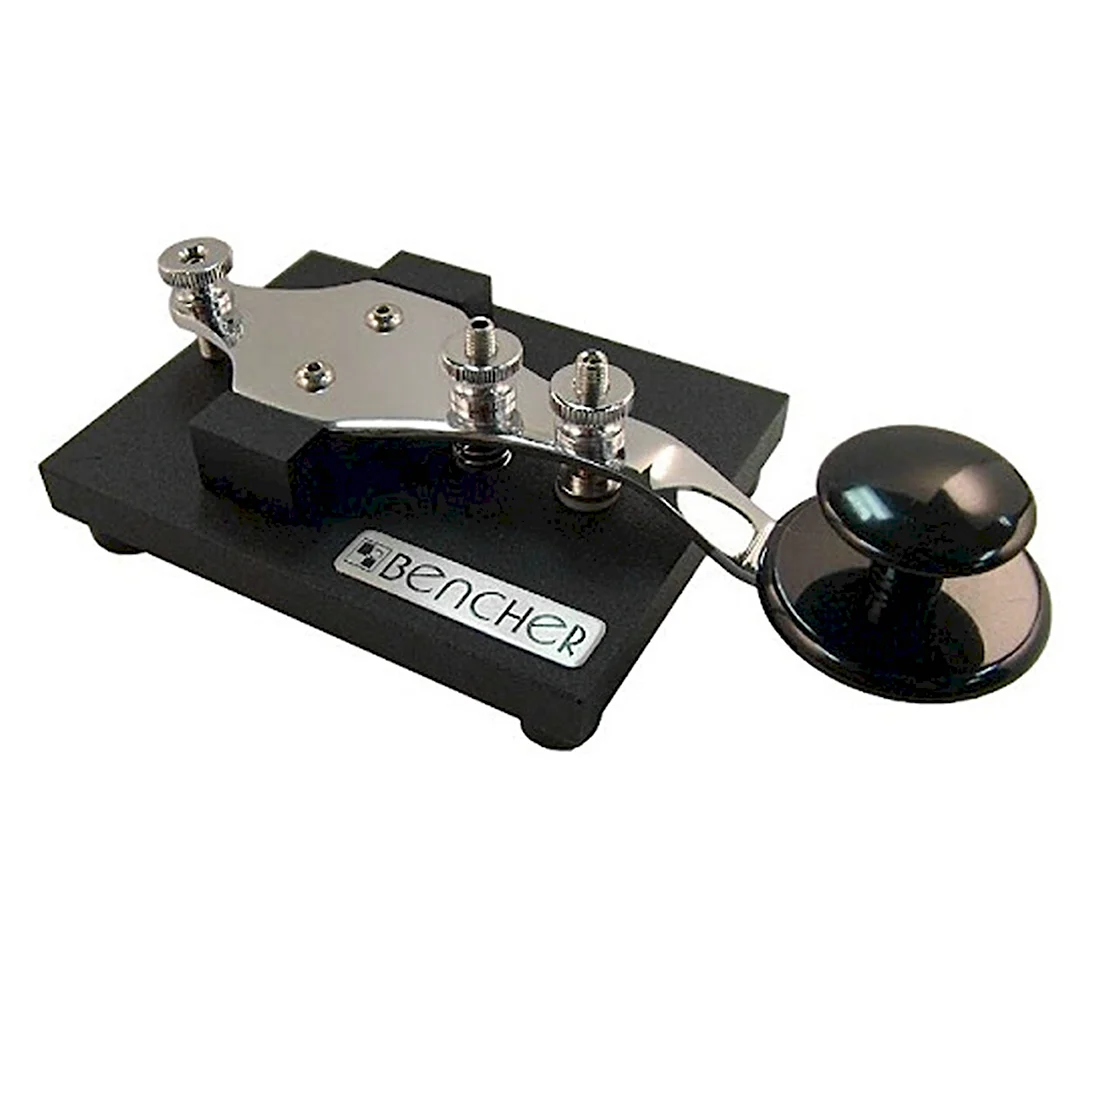 Bencher RJ-1 классический телеграфный ключ